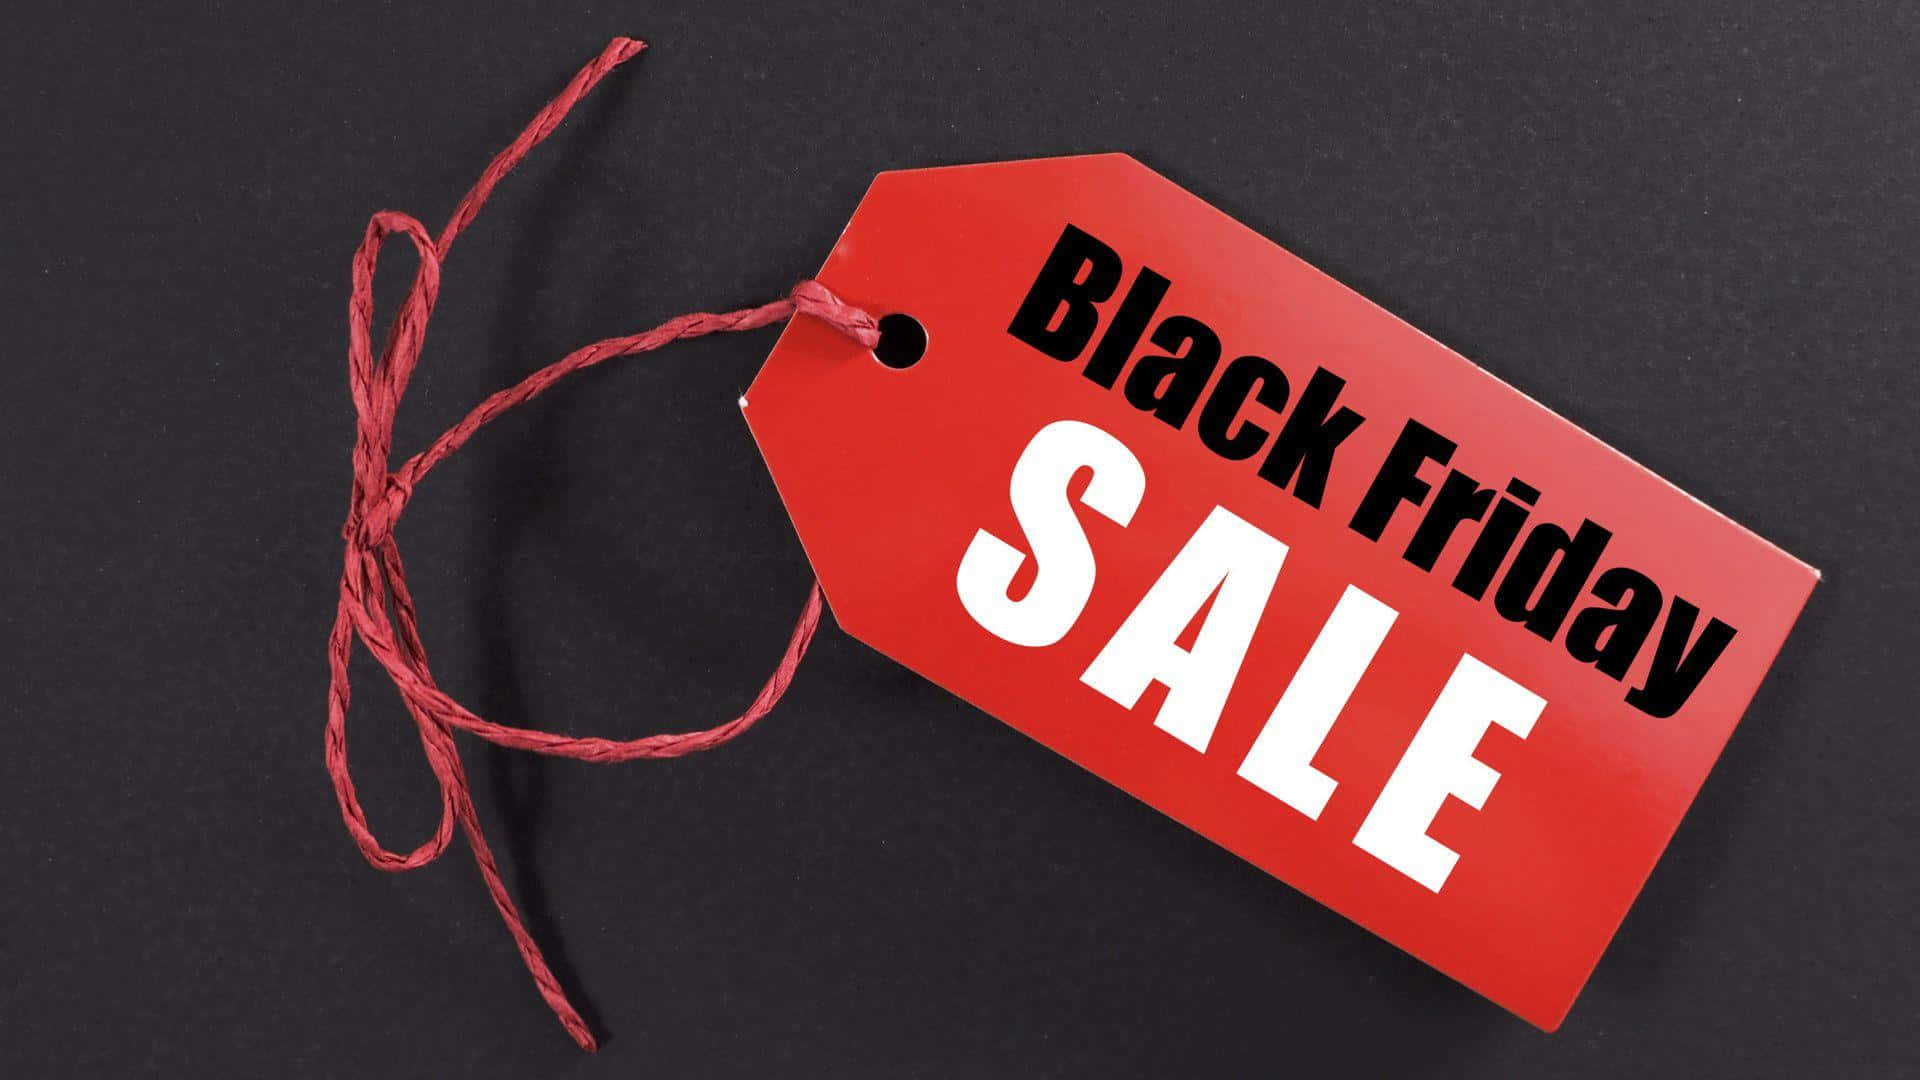 Black Friday Sale Tag On A Black Background